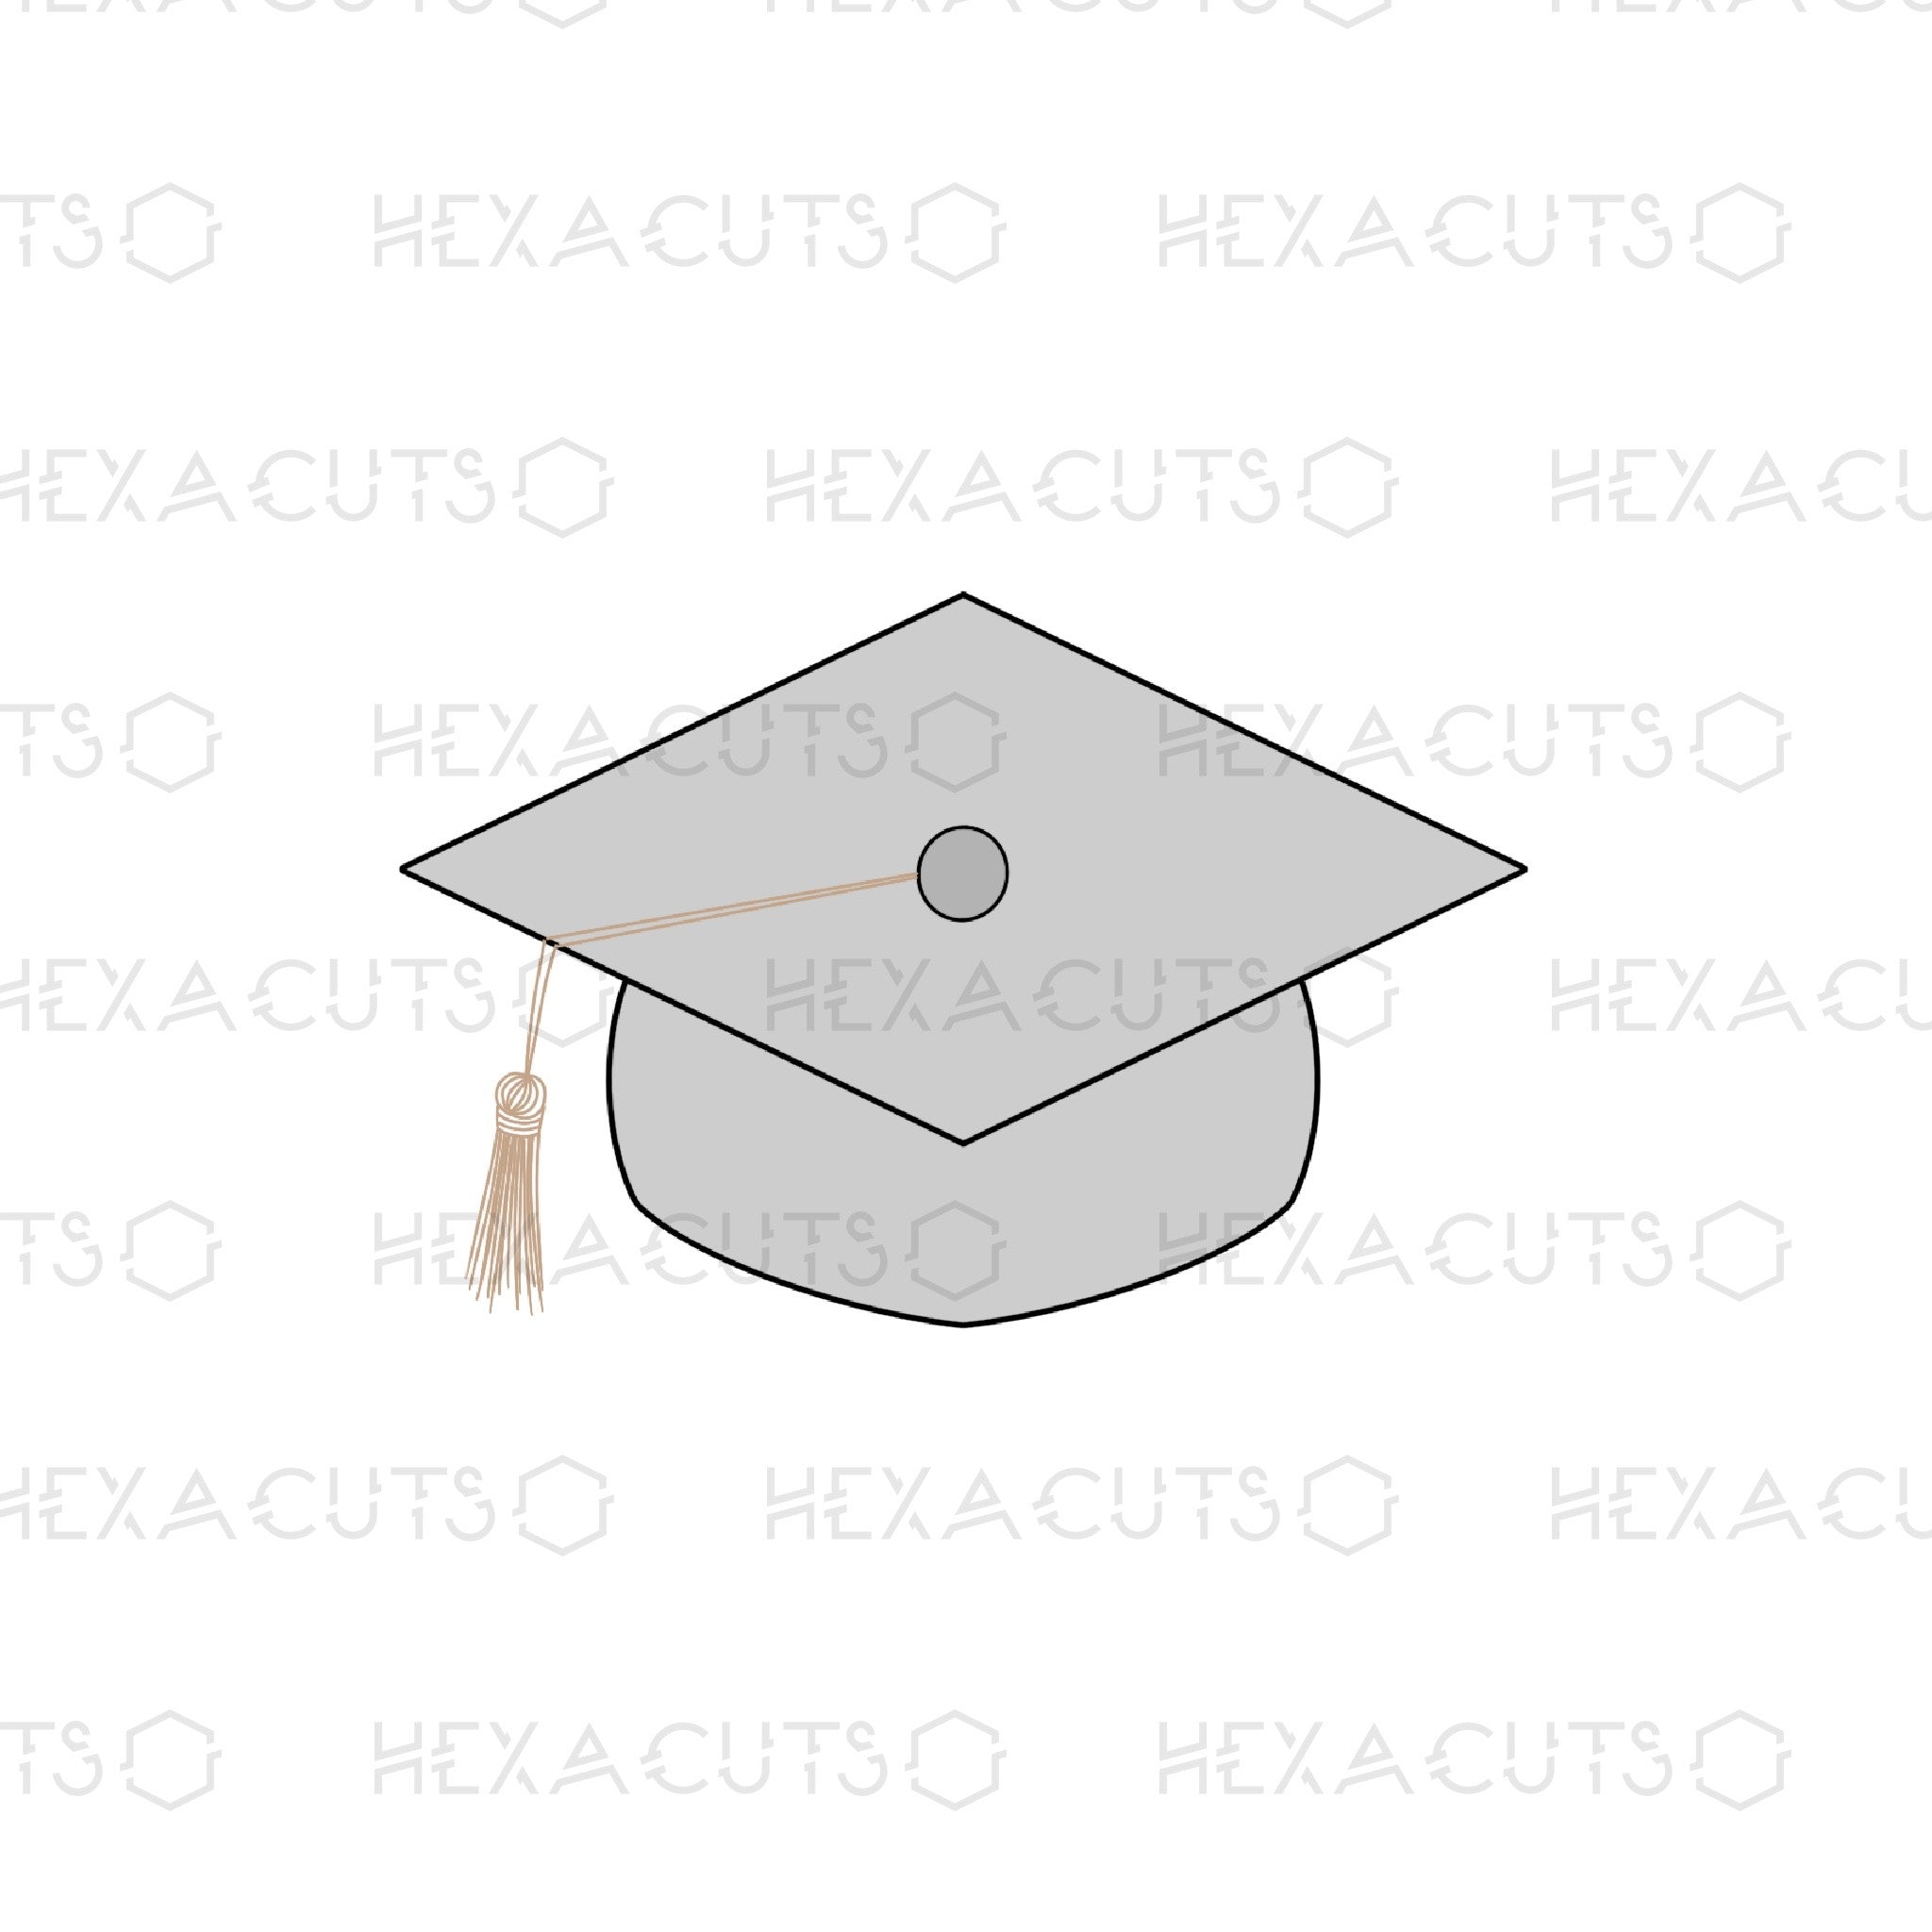 Graduation Cap Metal Design Stamp by Font Fixation